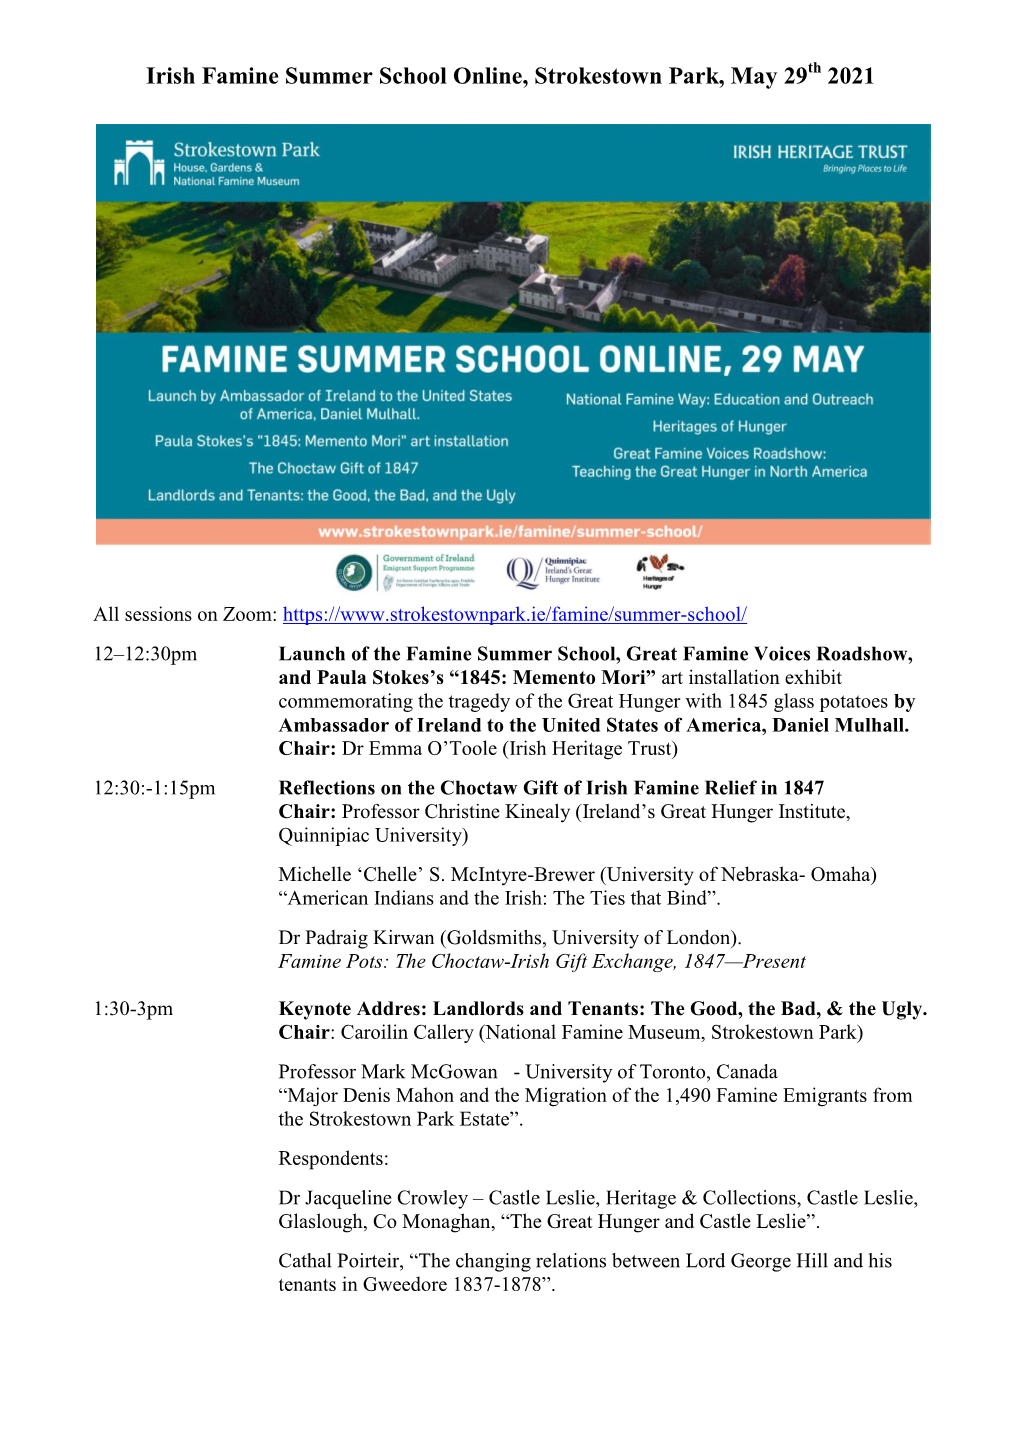 Irish Famine Summer School Online, Strokestown Park, May 29 2021